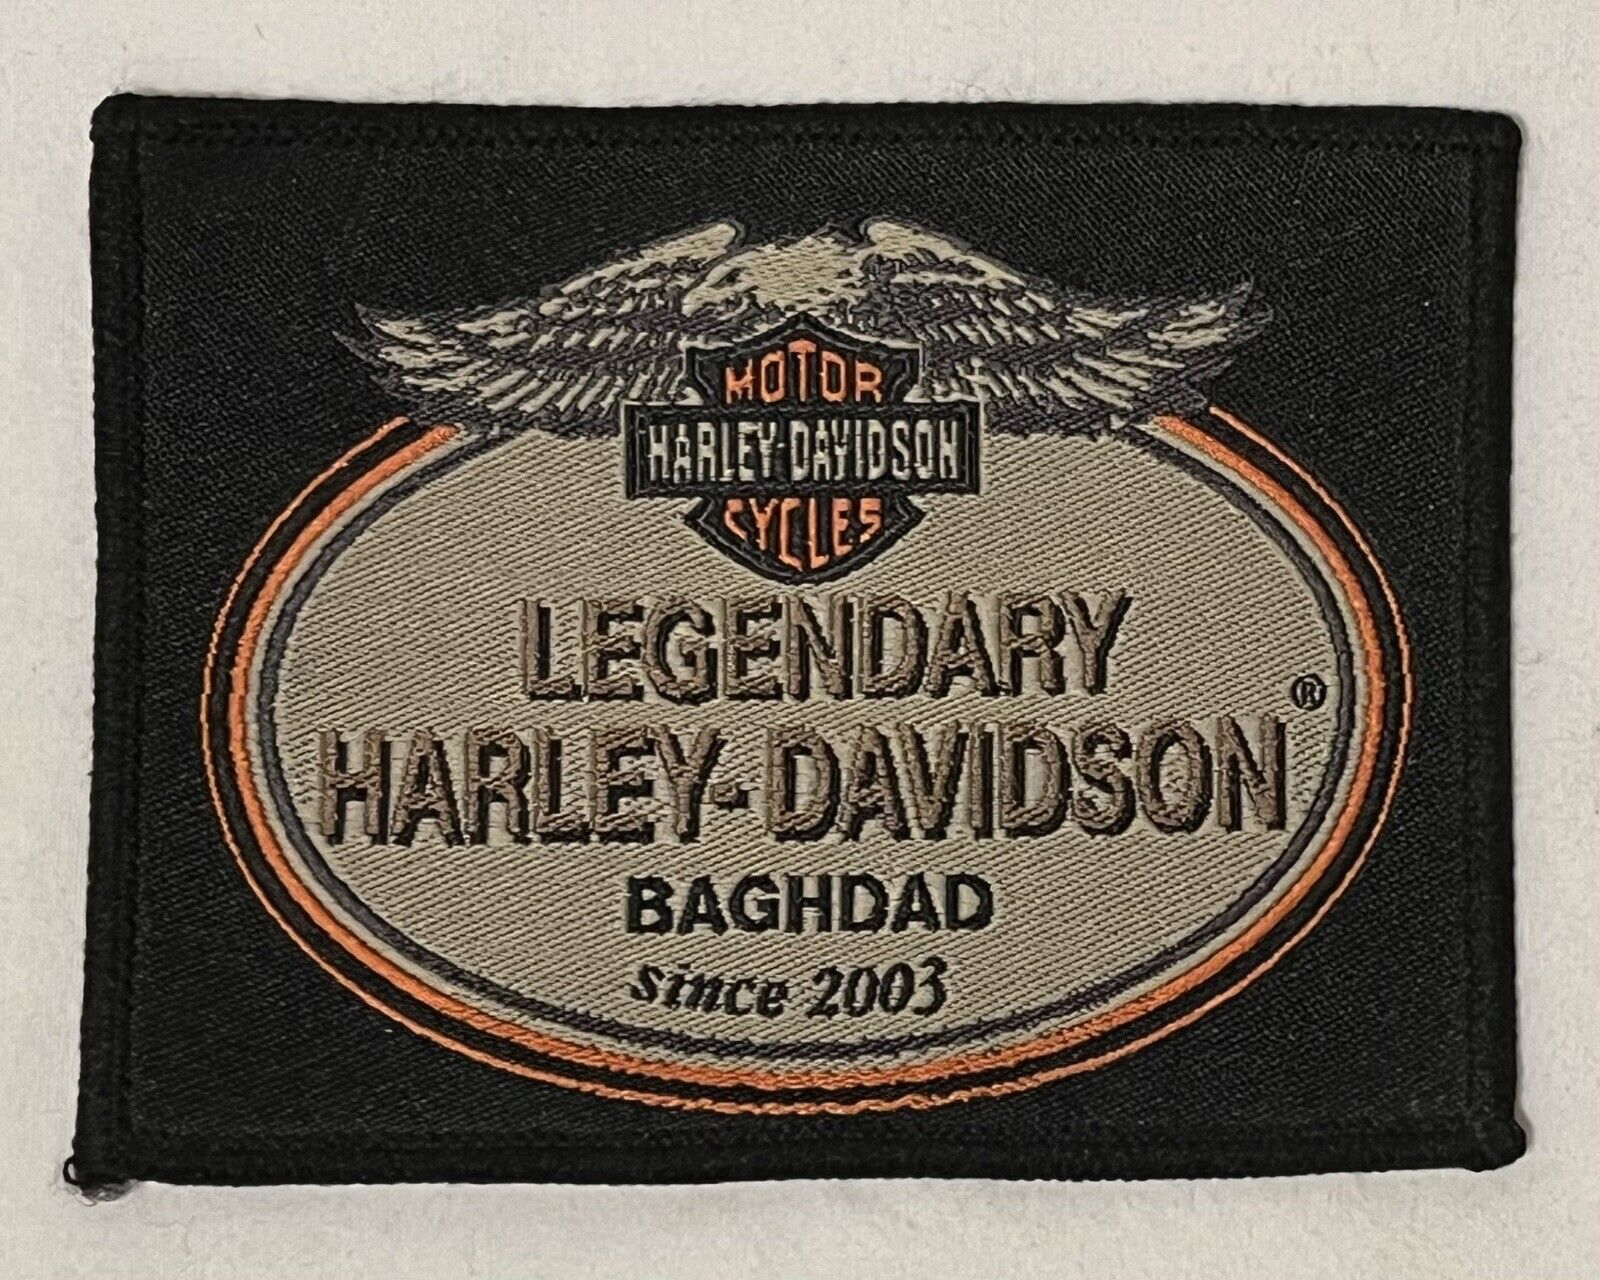 Legendary Harley Davidson Baghdad Since 2003 Patch